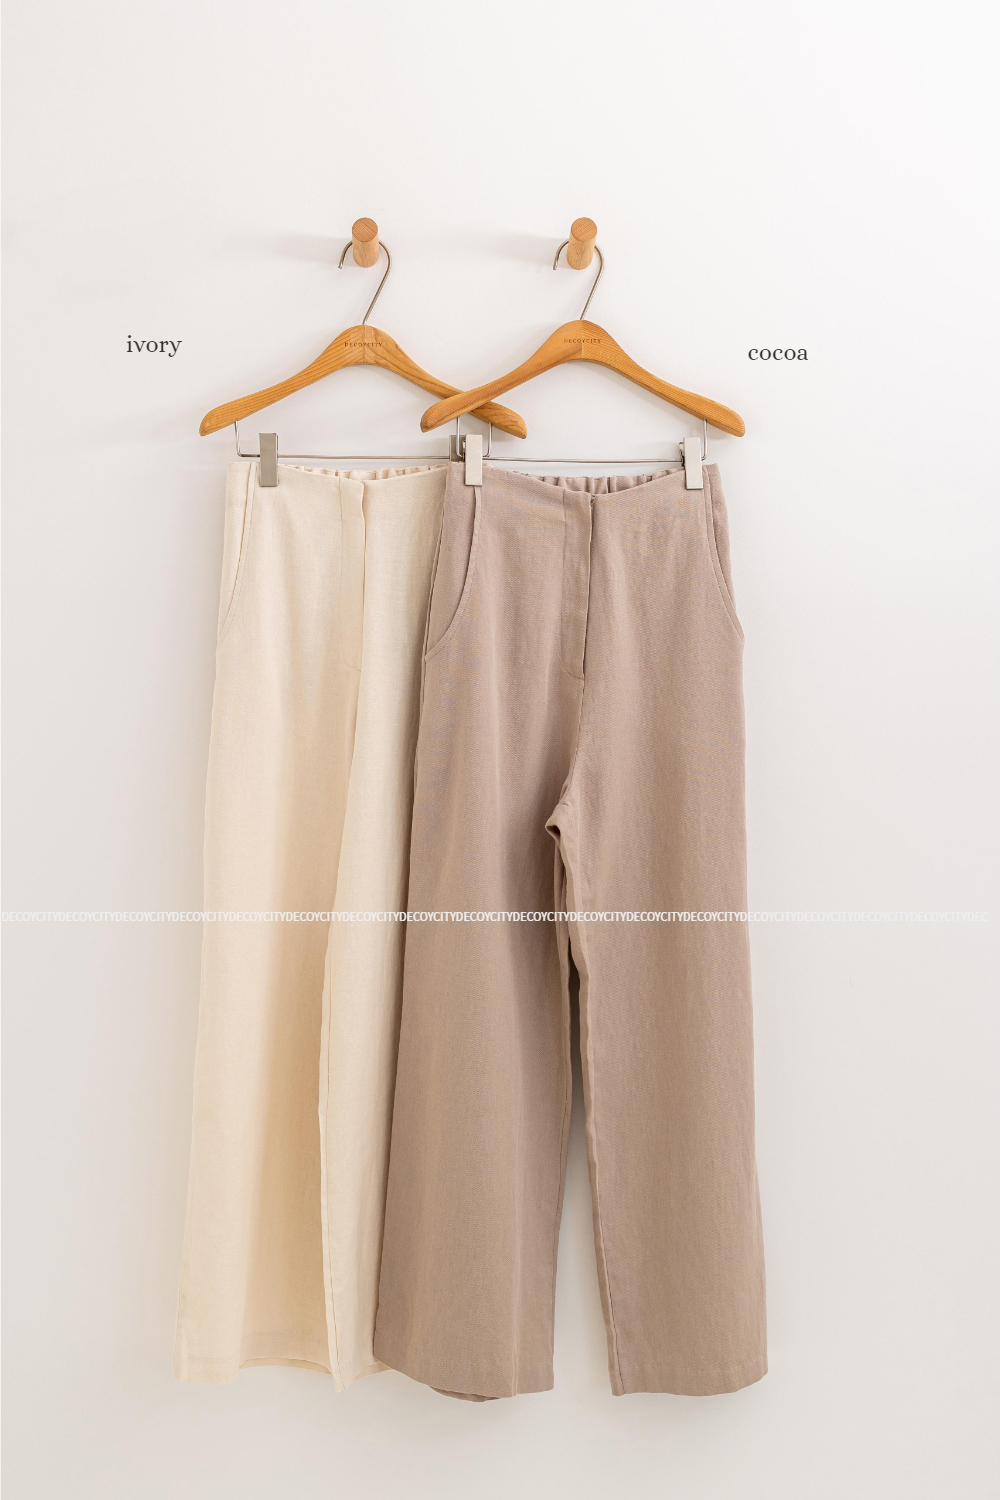 suspenders skirt/pants cream color image-S2L12